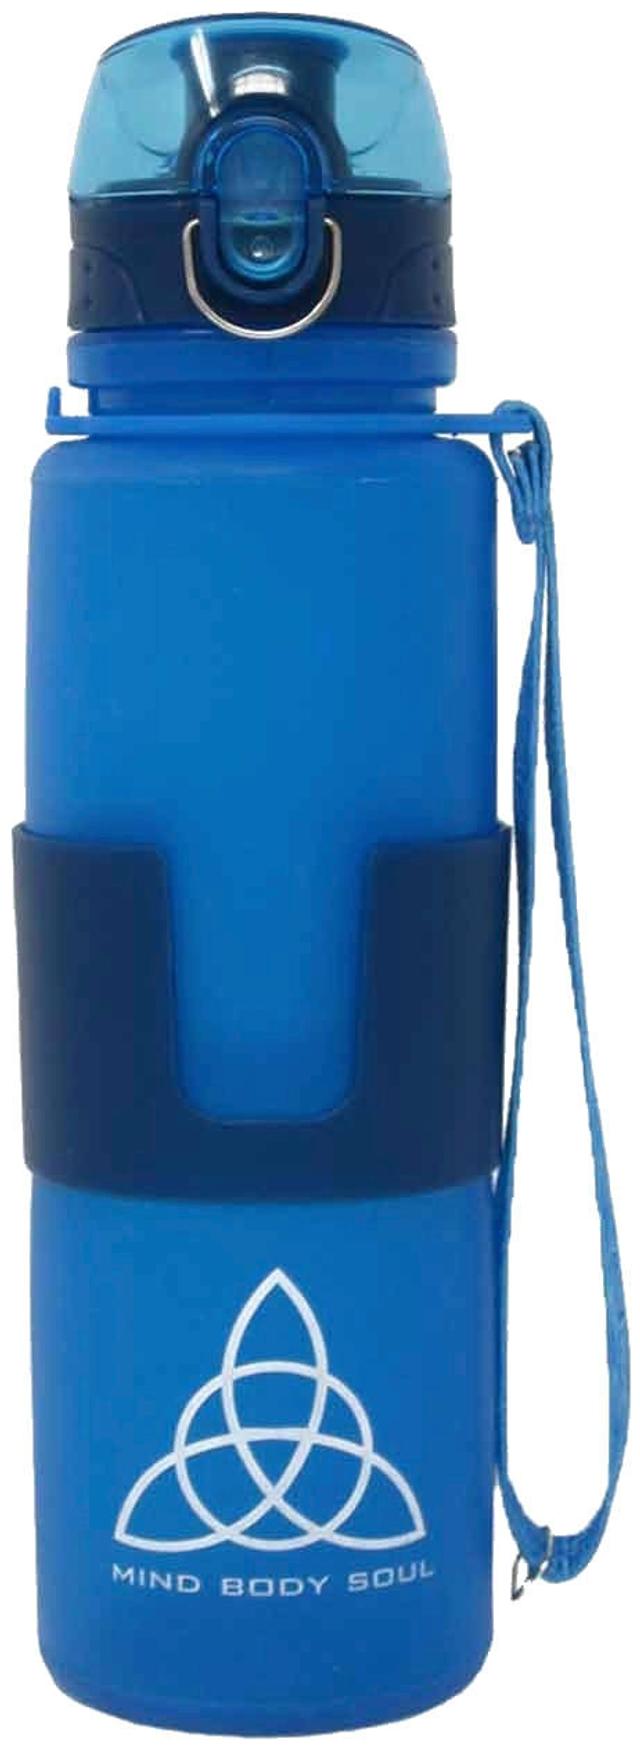 BMS juomapullo silikoni 0,65l sininen